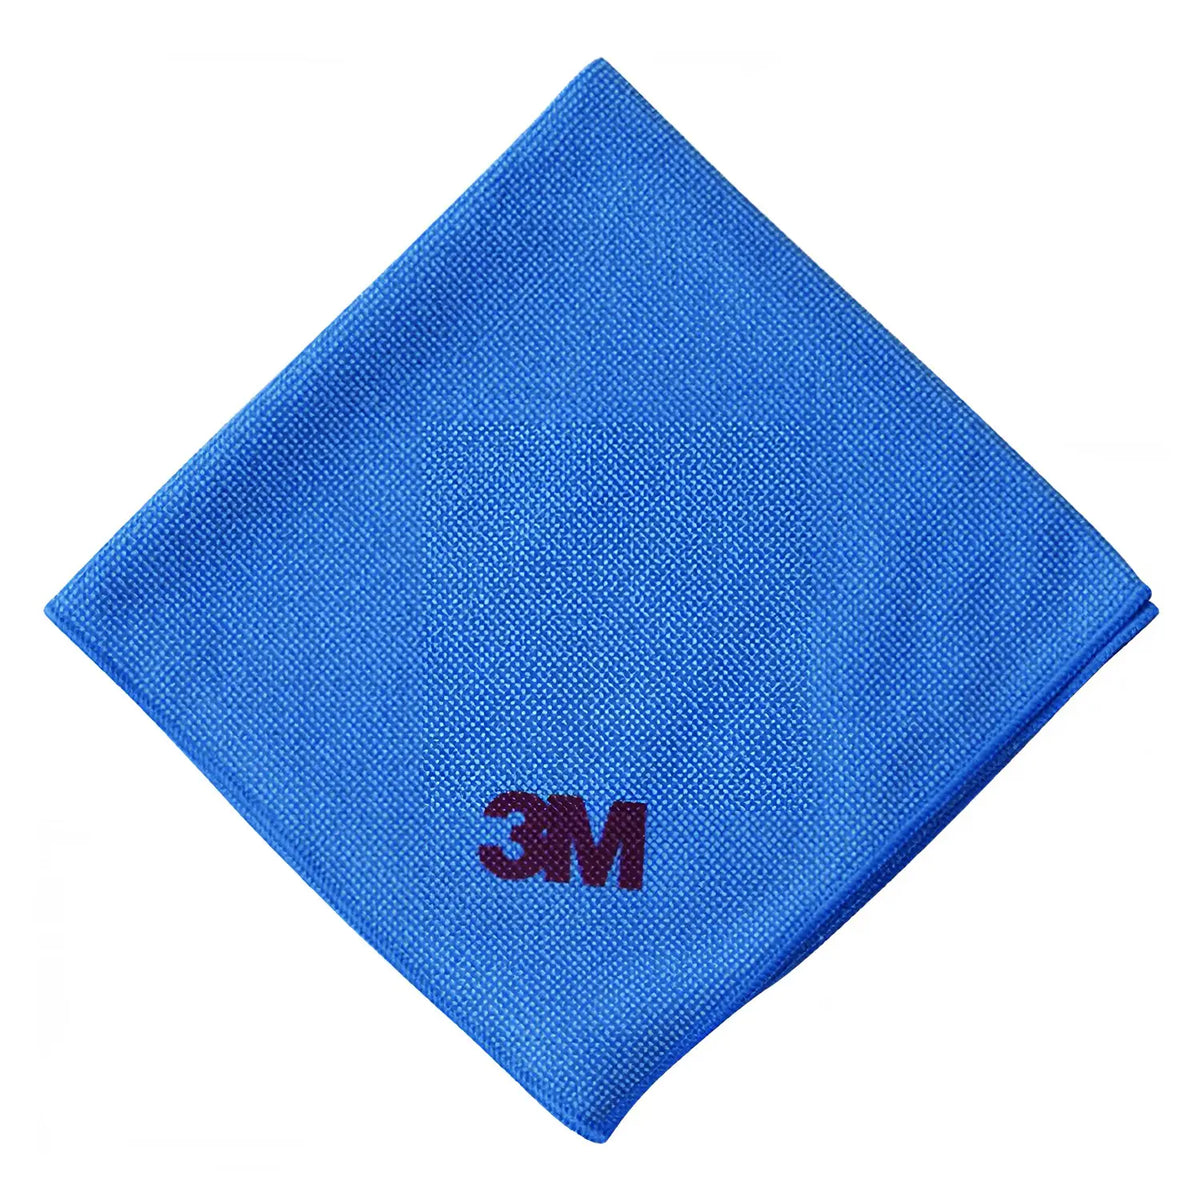 3M Scotch-Brite Nylon High-Durable Wiping Cloth